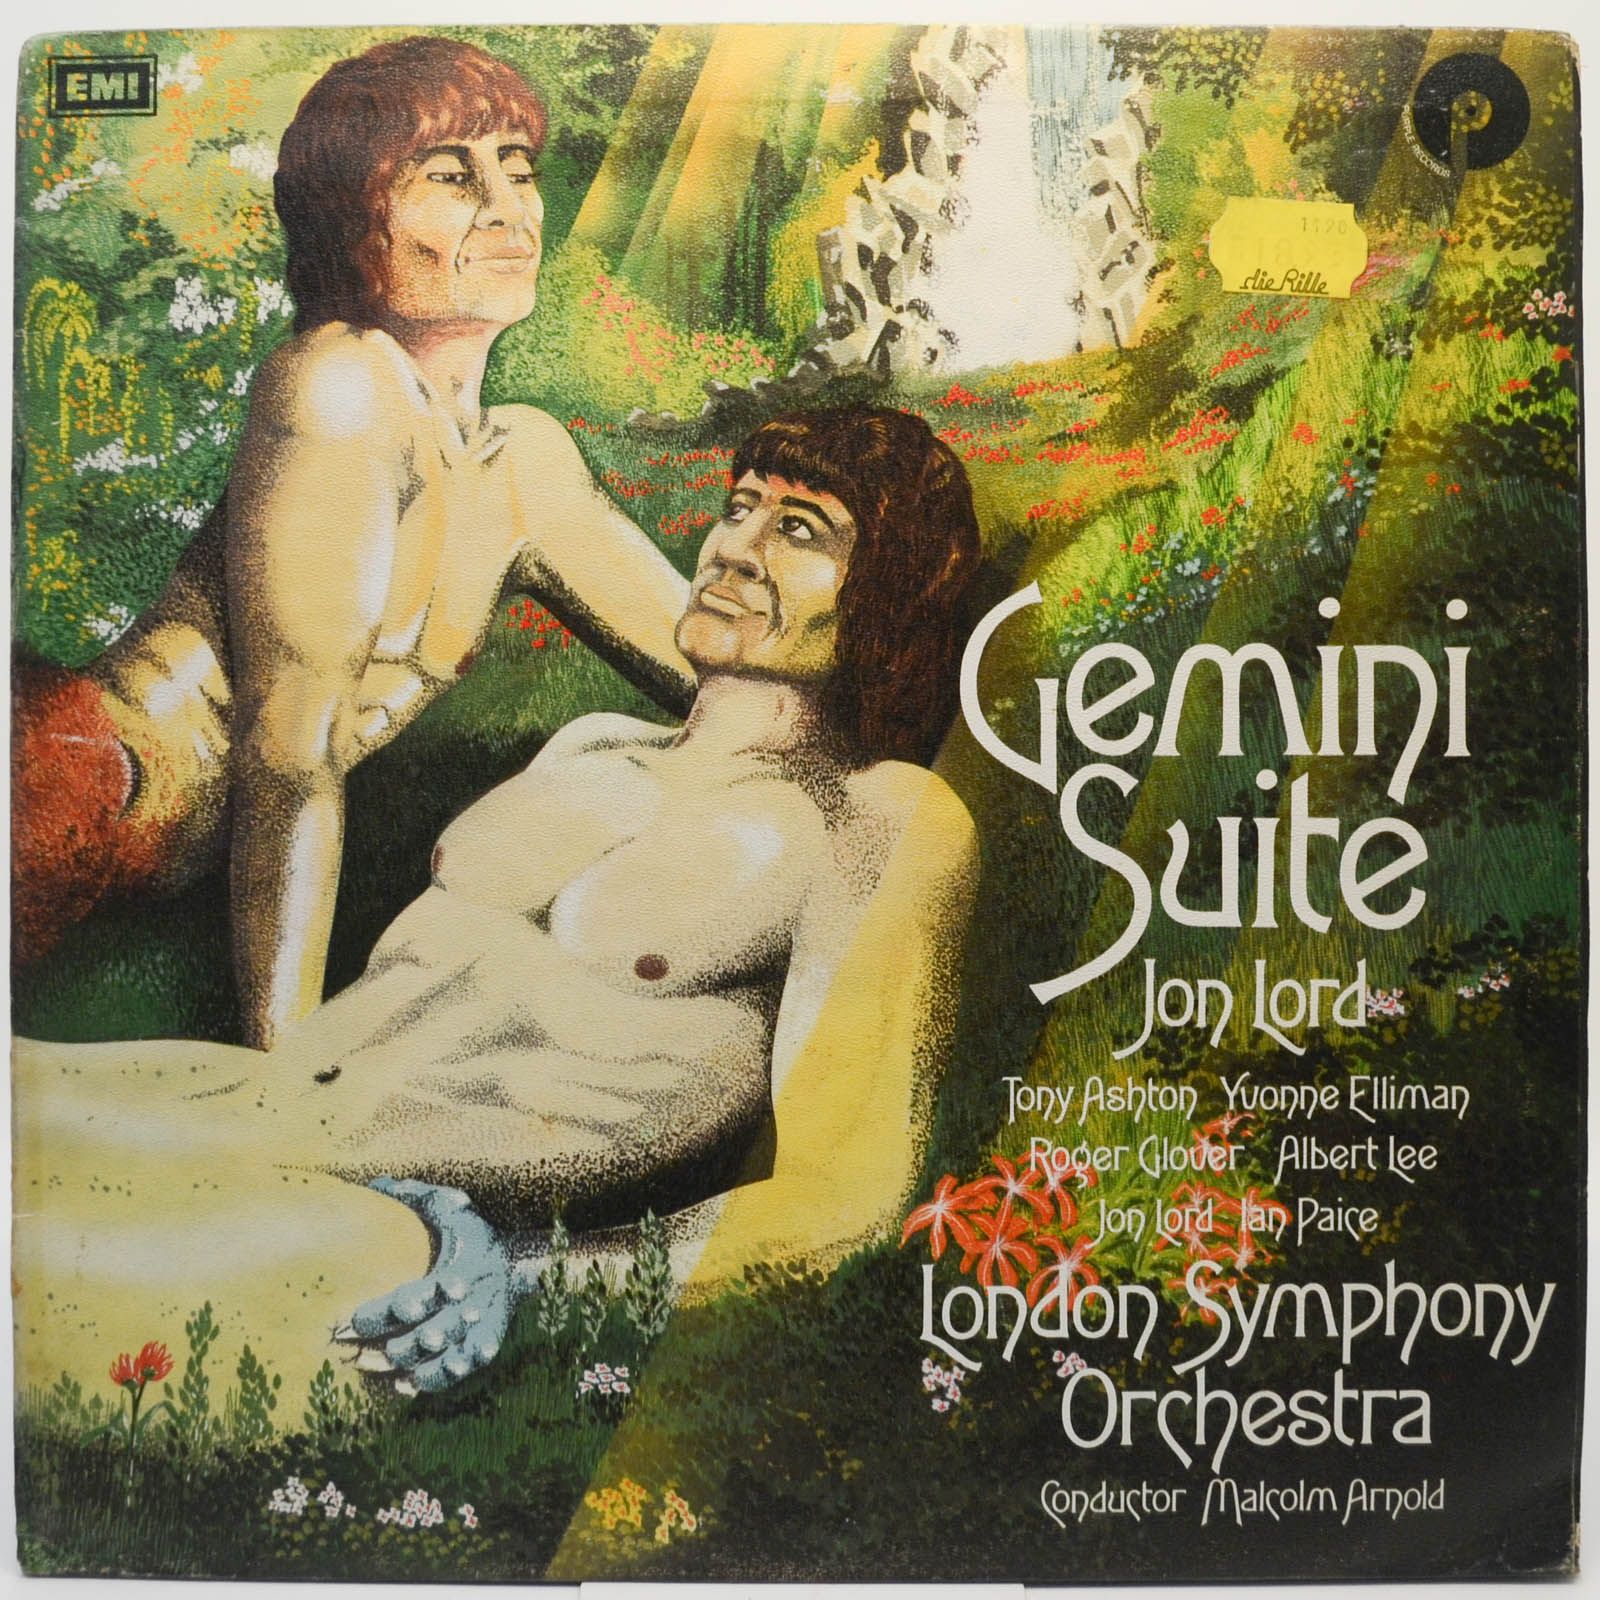 Jon Lord / London Symphony Orchestra — Gemini Suite (UK), 1971